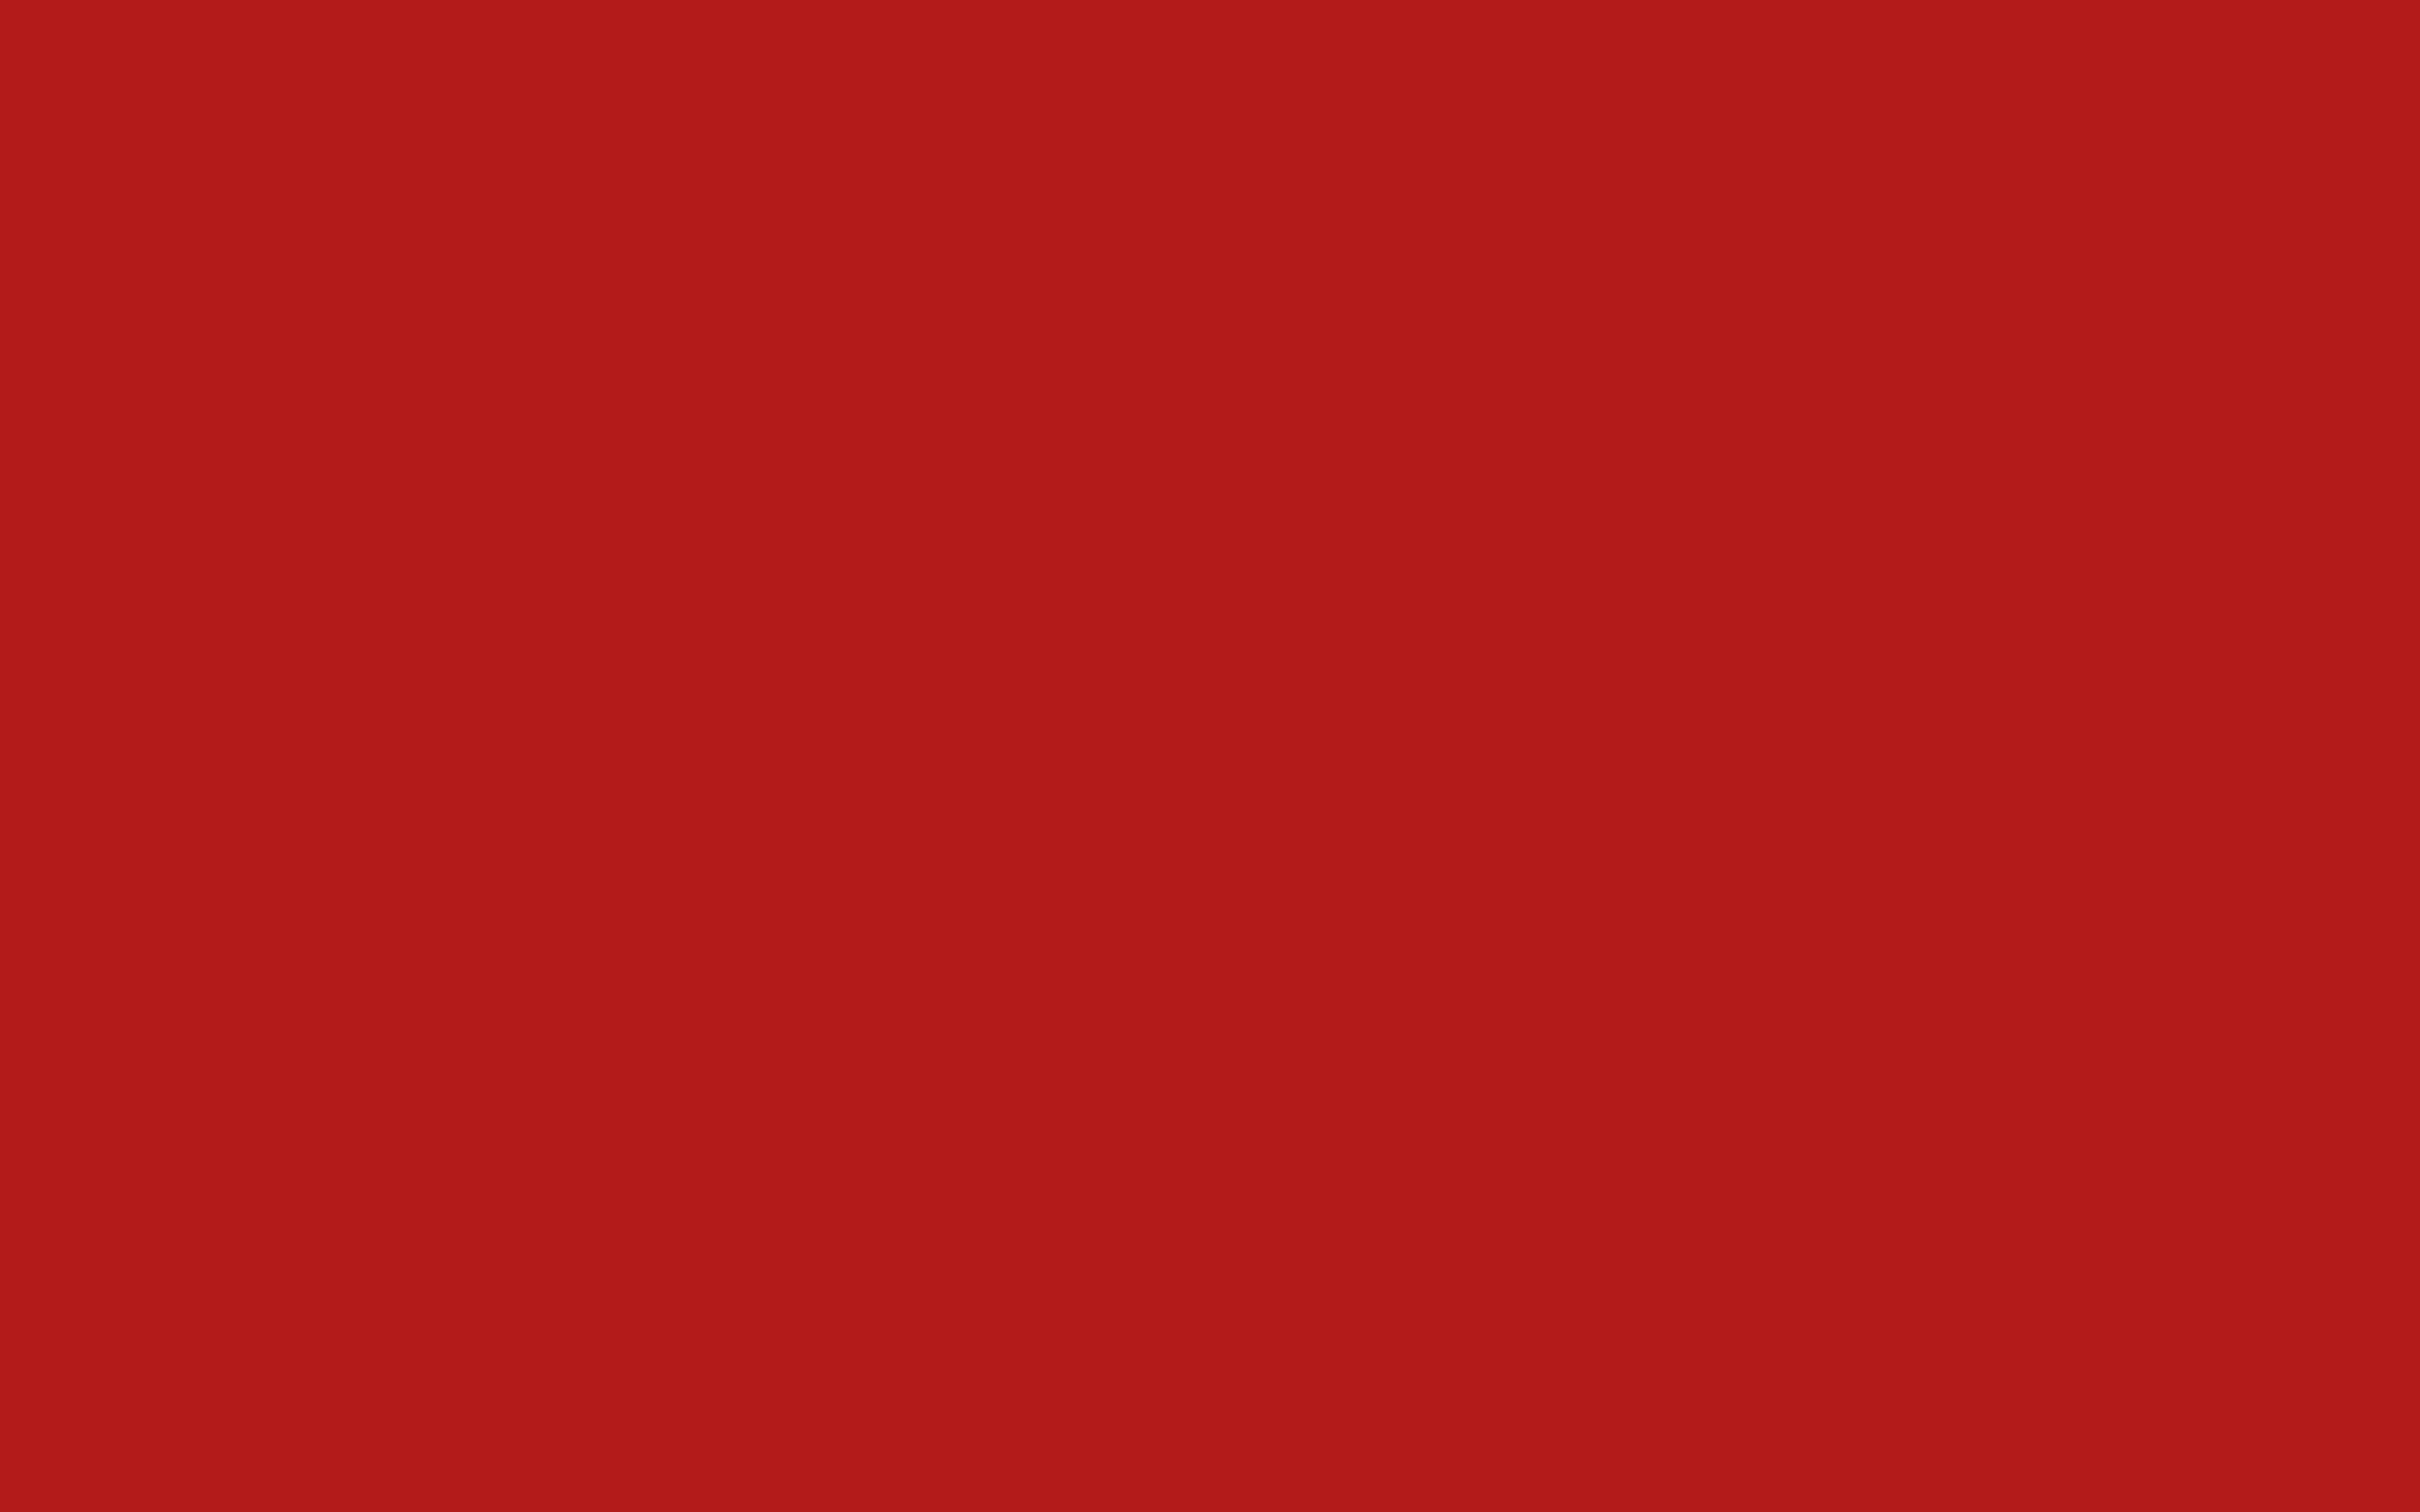 2560x1600 Red Solid Color Wallpaper 2120 2560 x 1600 - WallpaperLayer.com